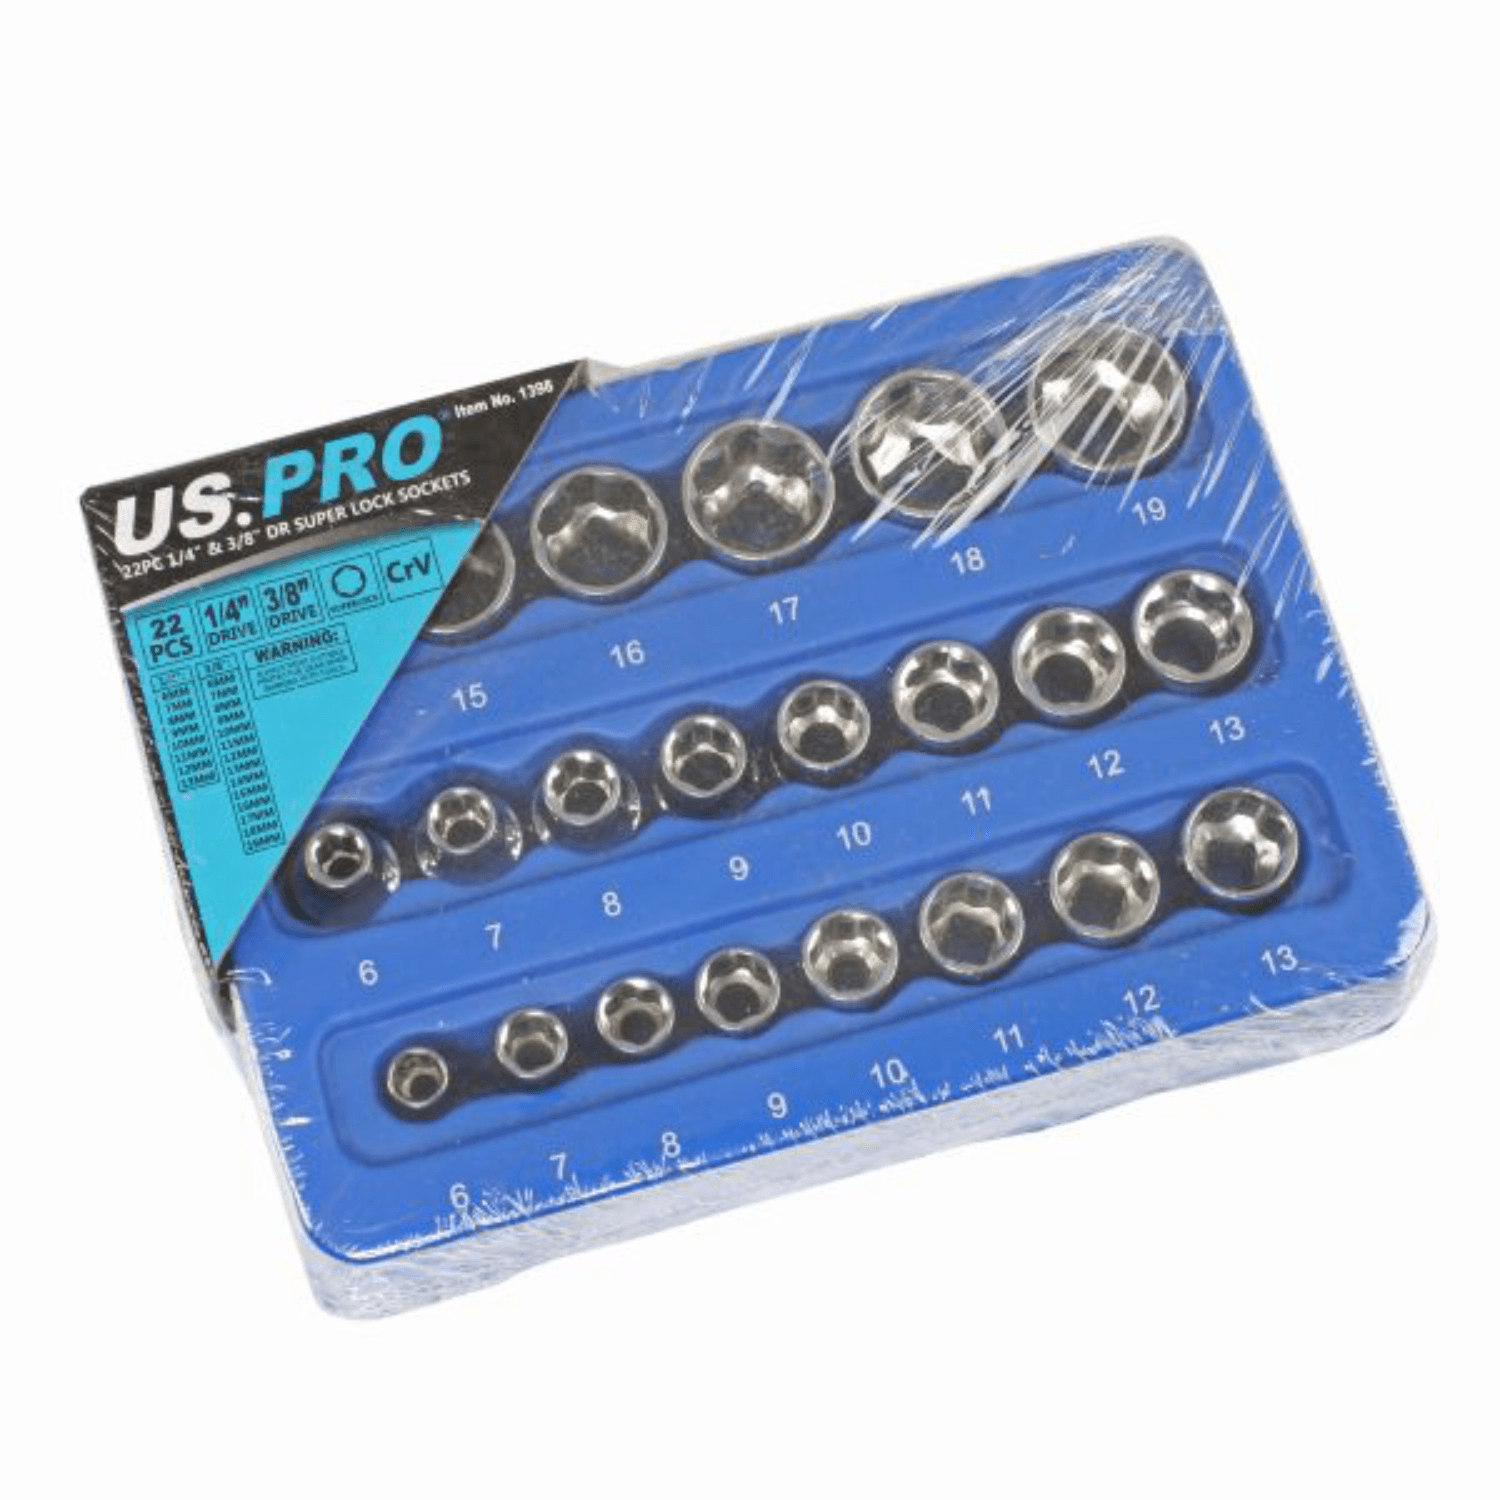 US PRO Tools Super-Lock Shallow Socket Set 22pc 1/4" 6-13mm & 3/8" 6-19mm 1398 - Tools 2U Direct SW